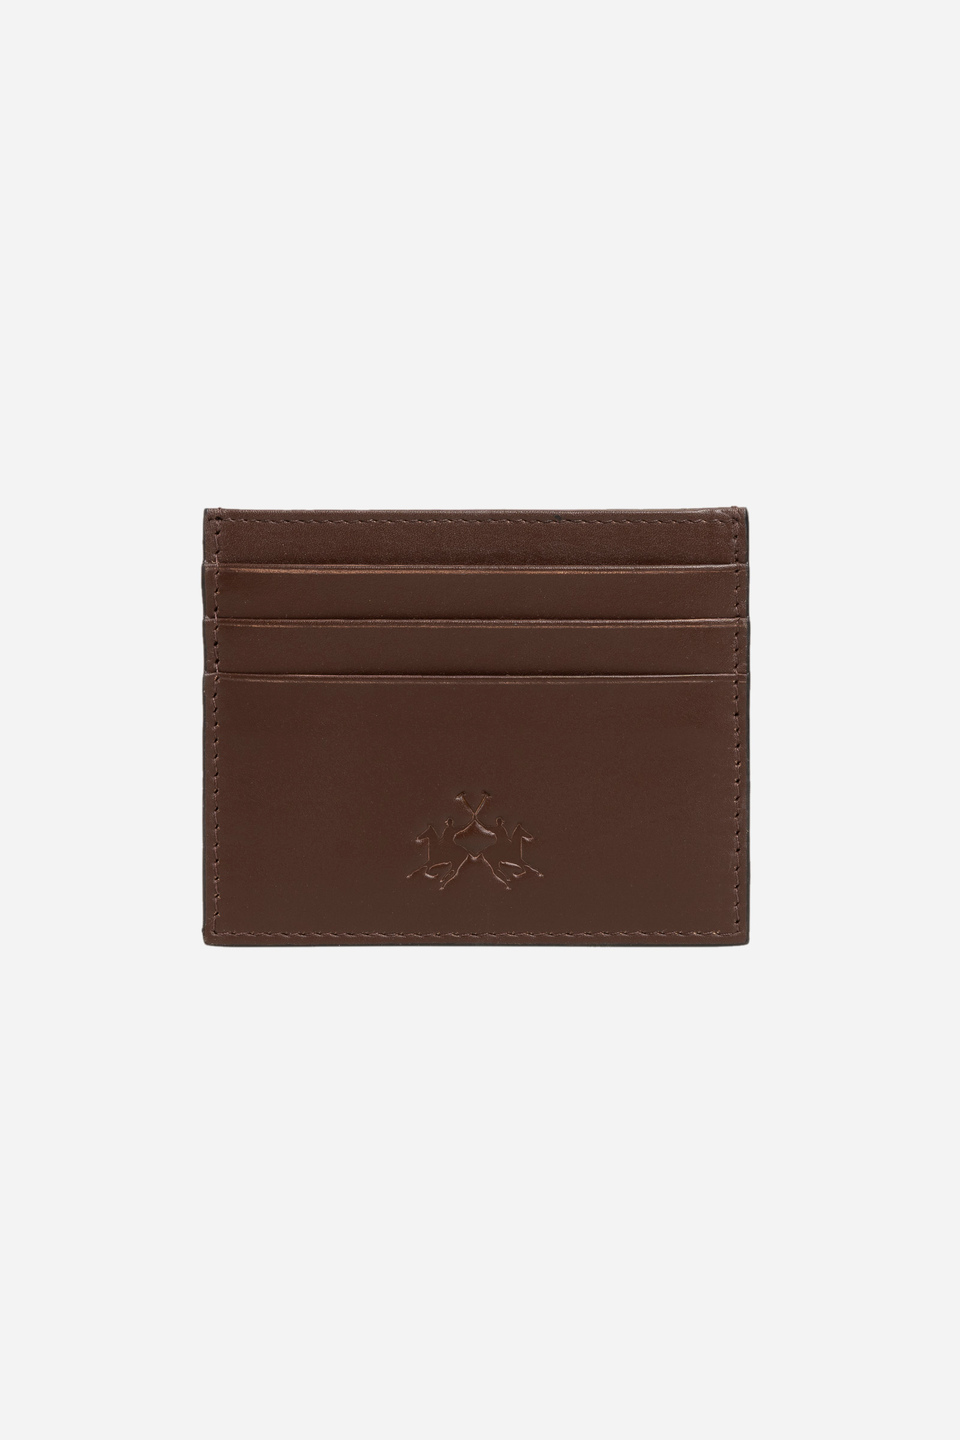 Herren-Brieftasche aus Leder | La Martina - Official Online Shop